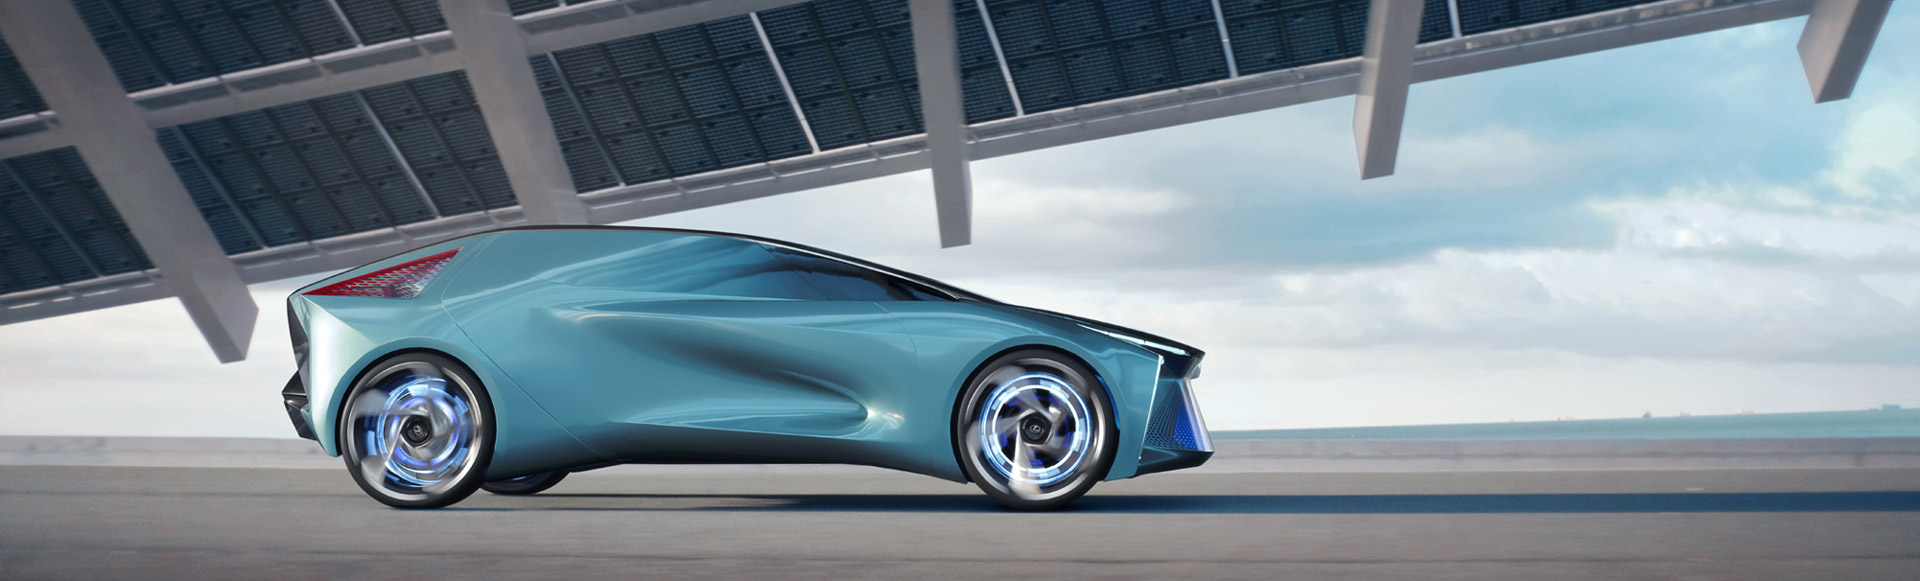 LEXUS、東京モーターショーで次世代電動化ビジョン「Lexus Electrified」を発表